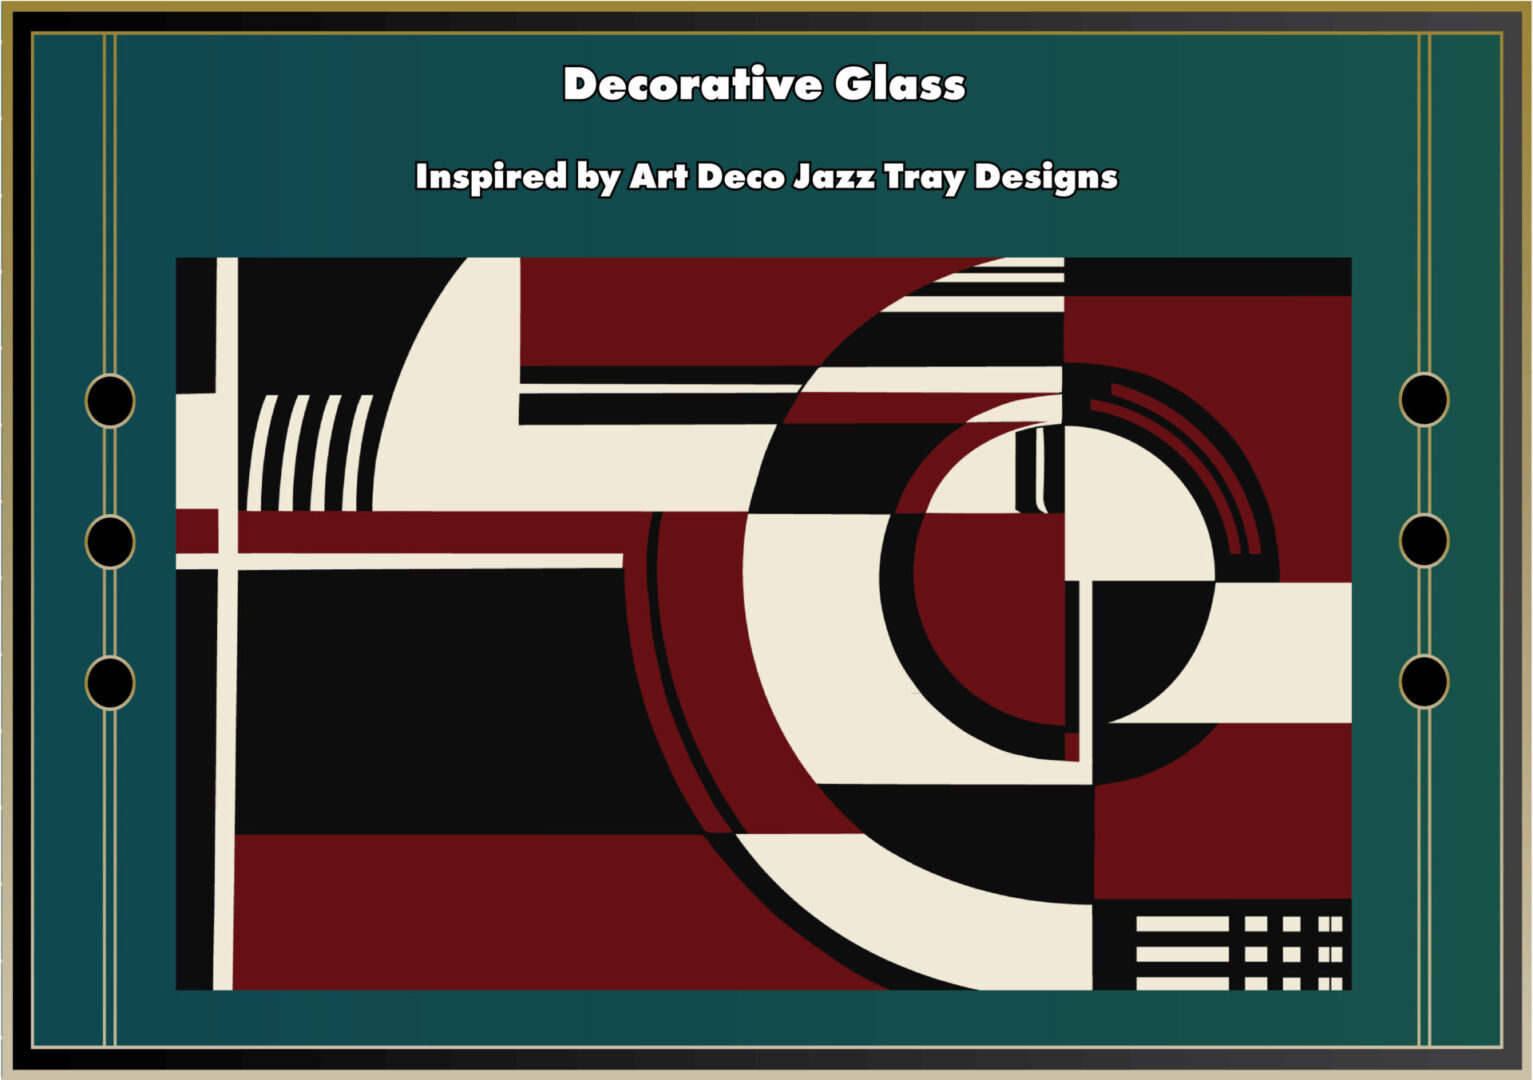 Art Deco Jazz Tray Designs inspired Decorative Glass